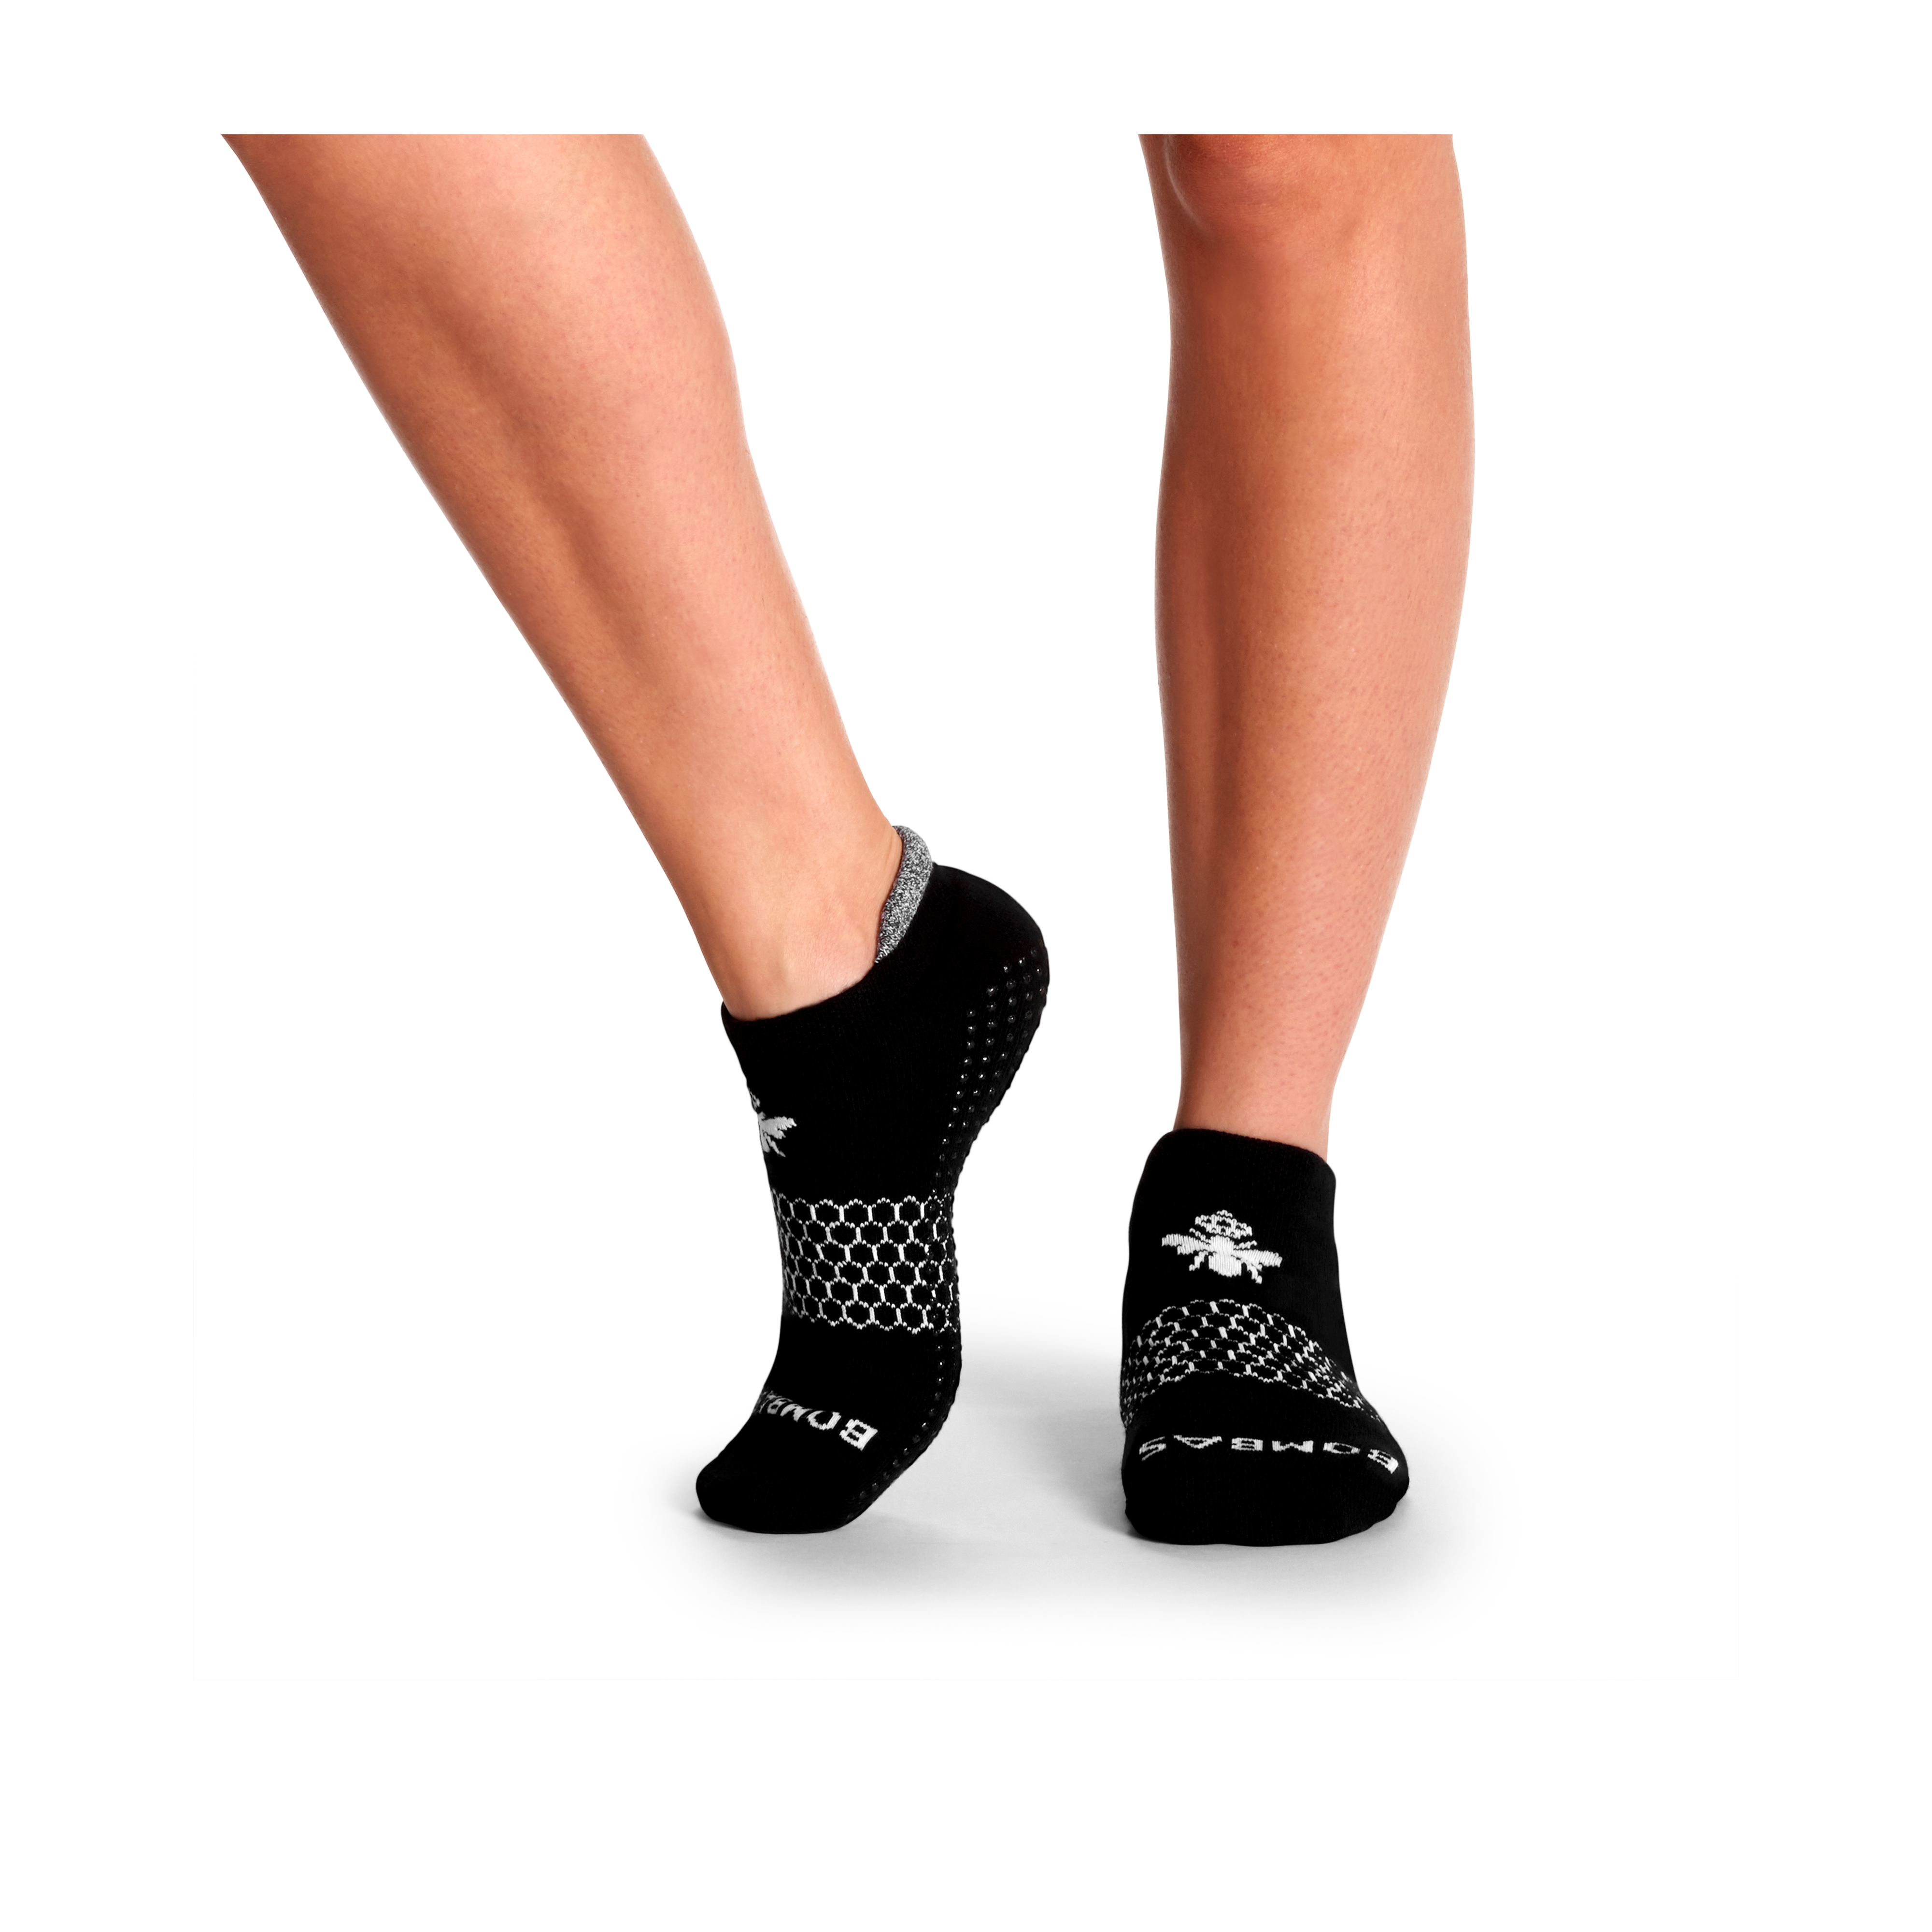 HSMQHJWE Crew Socks Cute Compression Socks For Men Women'S Pearl Lace Socks  Breathable Socks Ballerina Socks Non Slip Socks Stand Up Board Sock 